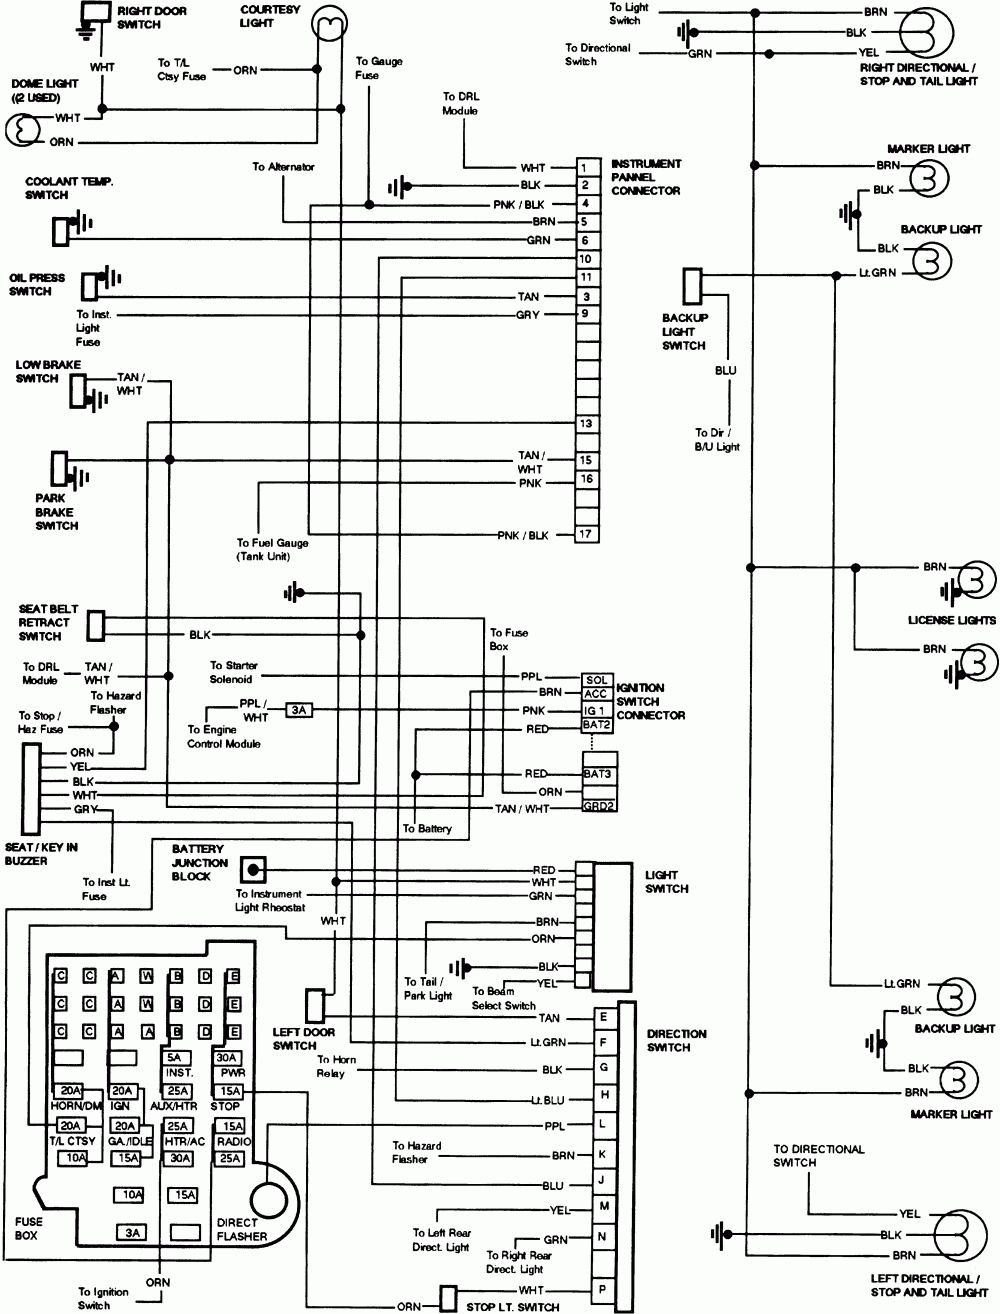 1989 Chevy Truck Tail Light Wiring - Wiring Diagram Detailed - 1989 Chevy Truck Wiring Diagram